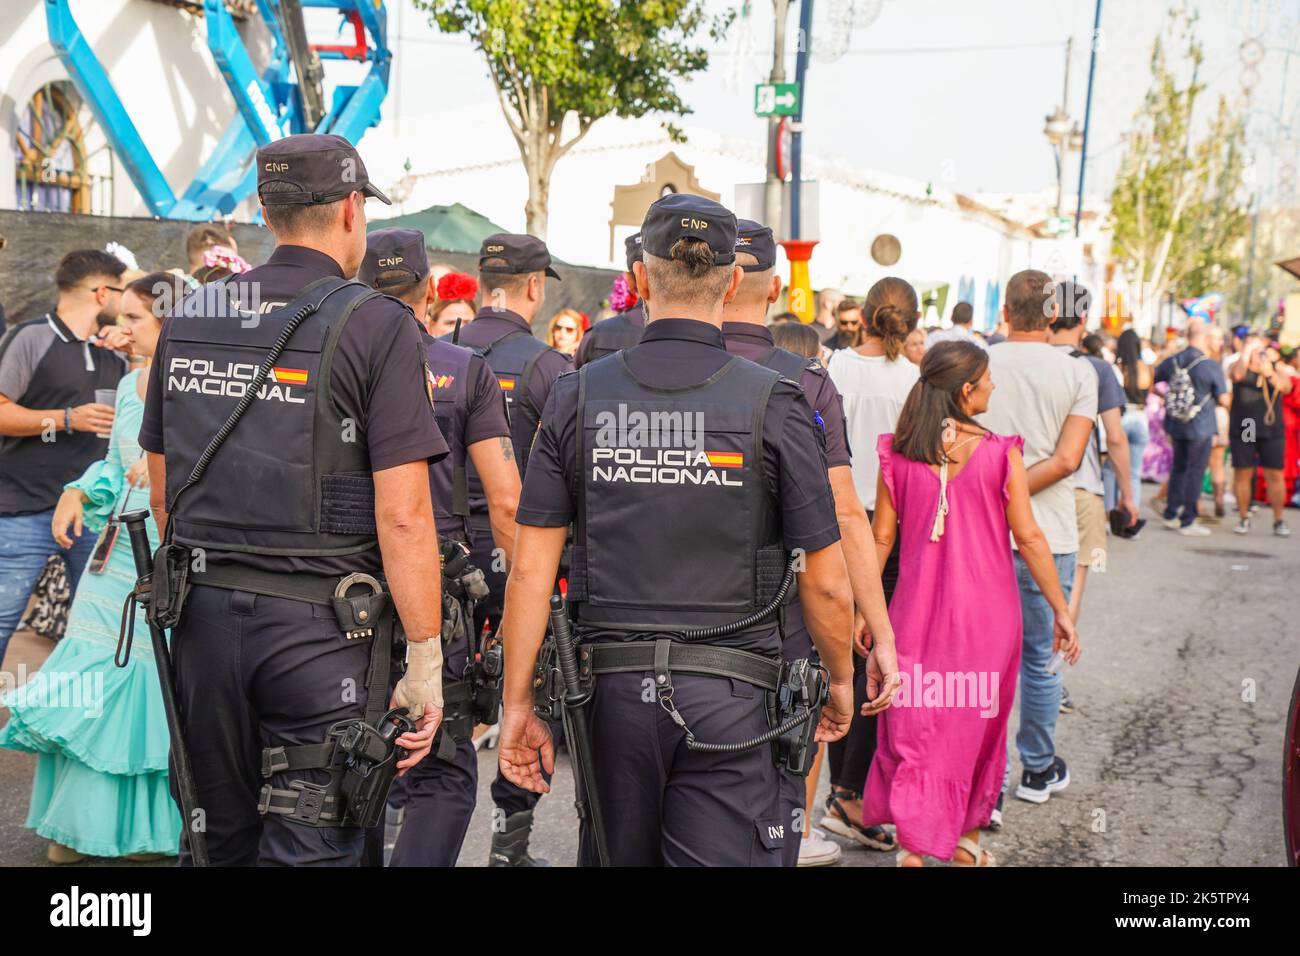 National Spanish police patrolling on annual fair in Fuengirola, Spain. Stock Photo